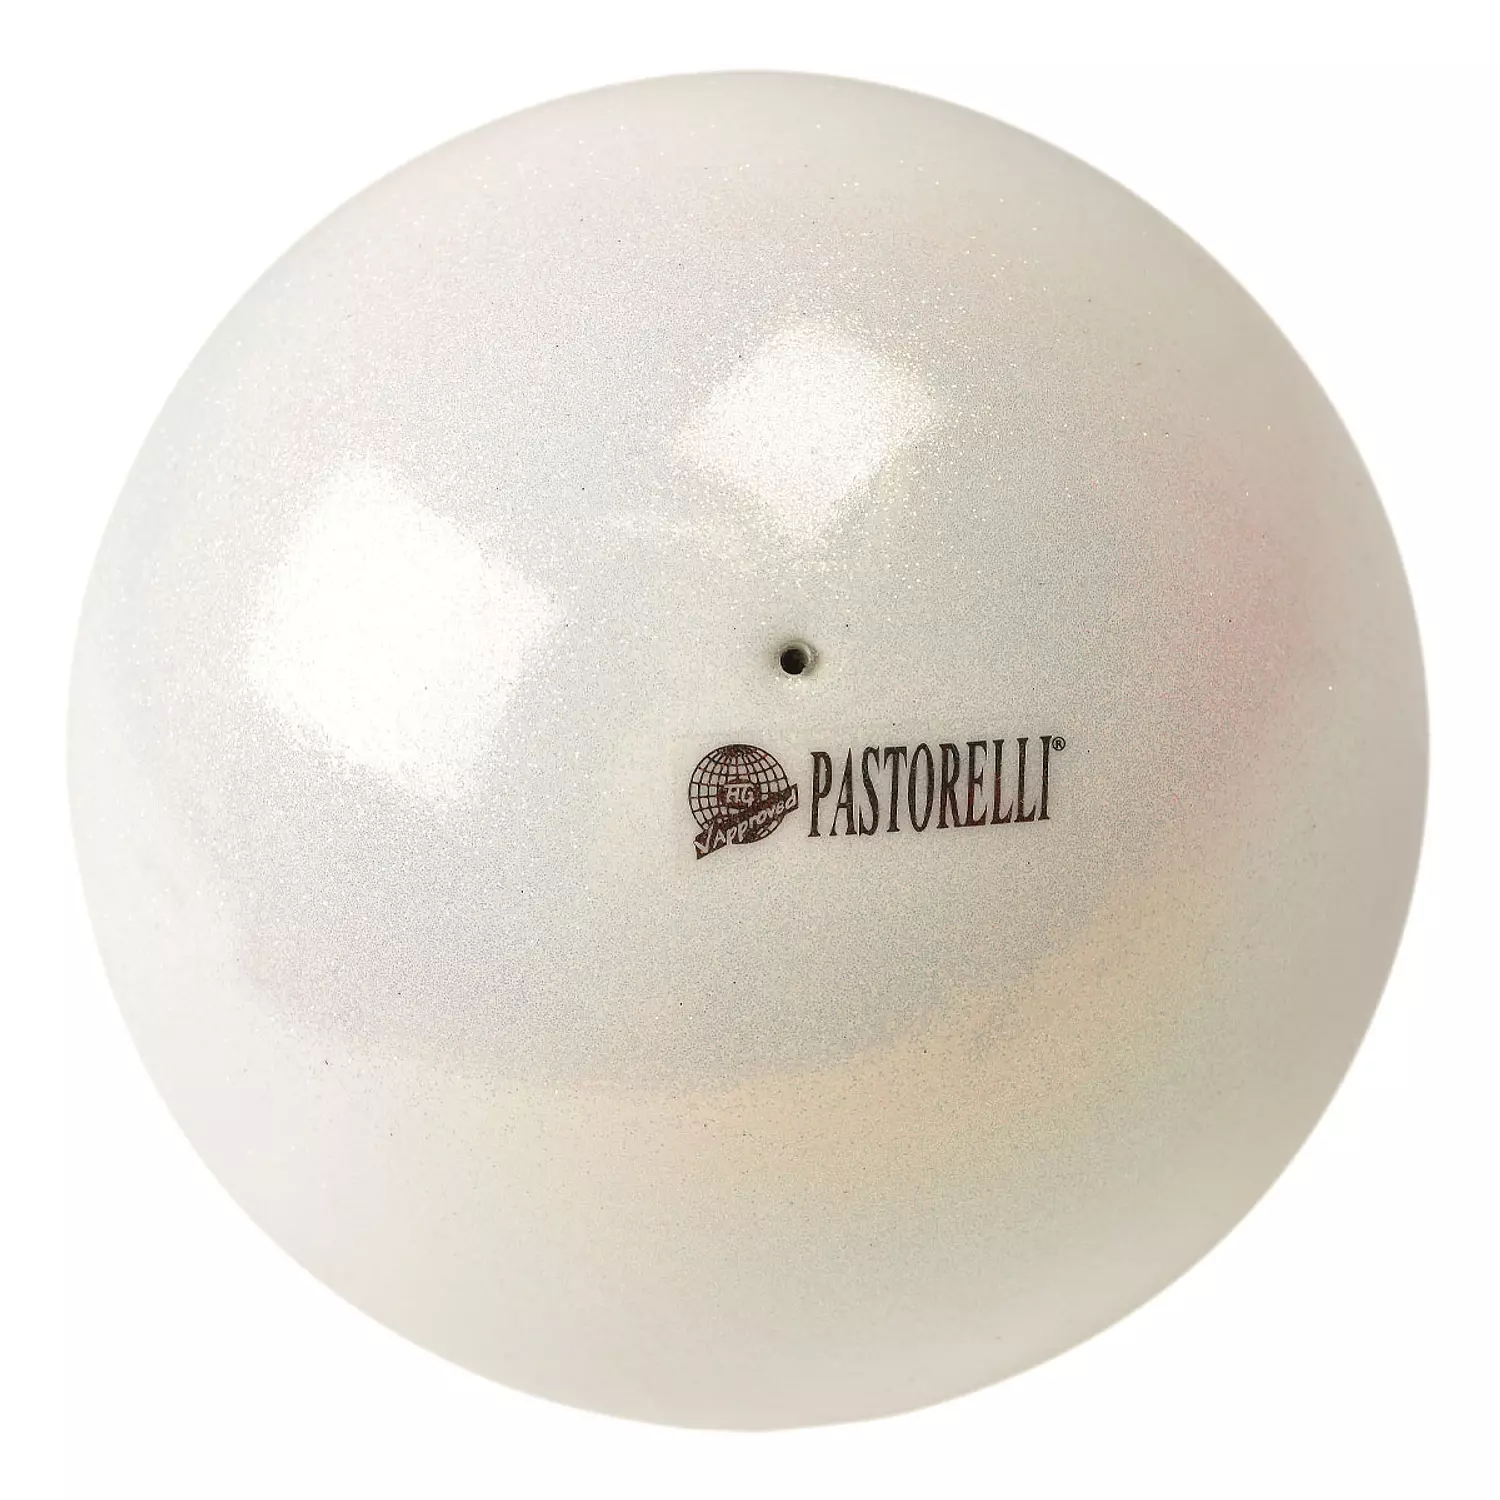 Pastorelli-High Vision Ball | 18cm FIG hover image